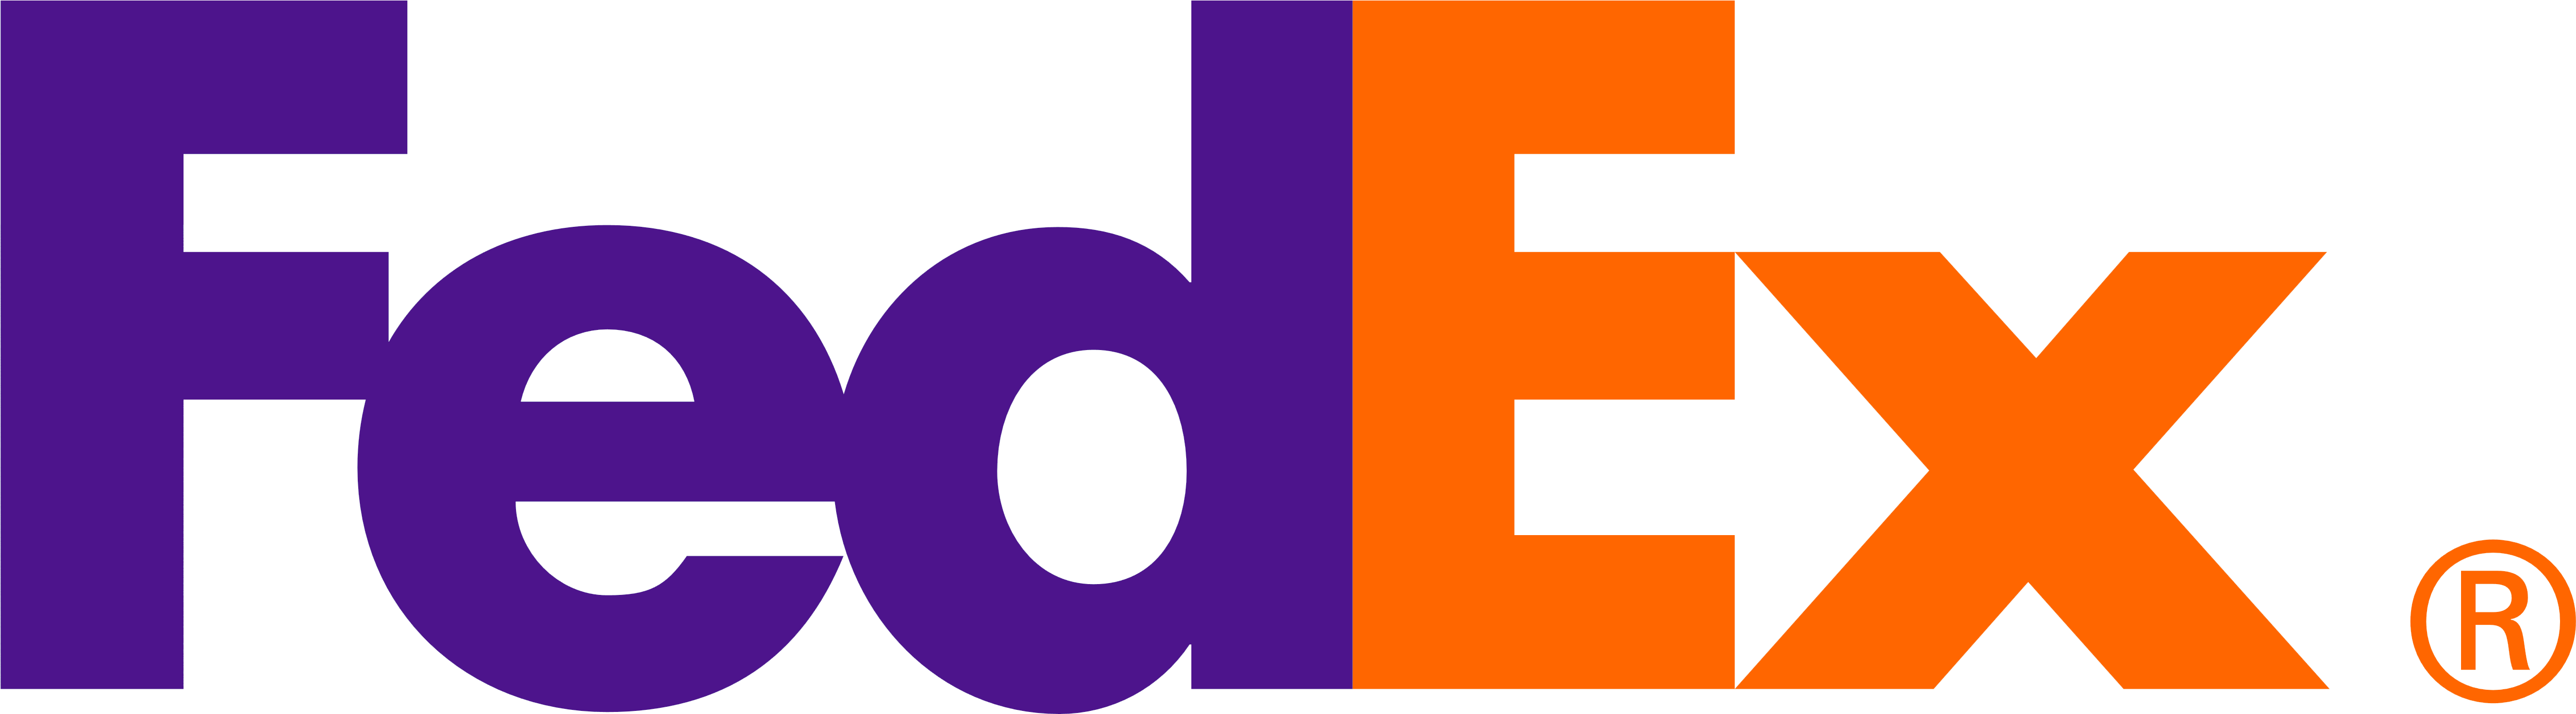 Global Links Services - Fedex Logos (5231x1680)